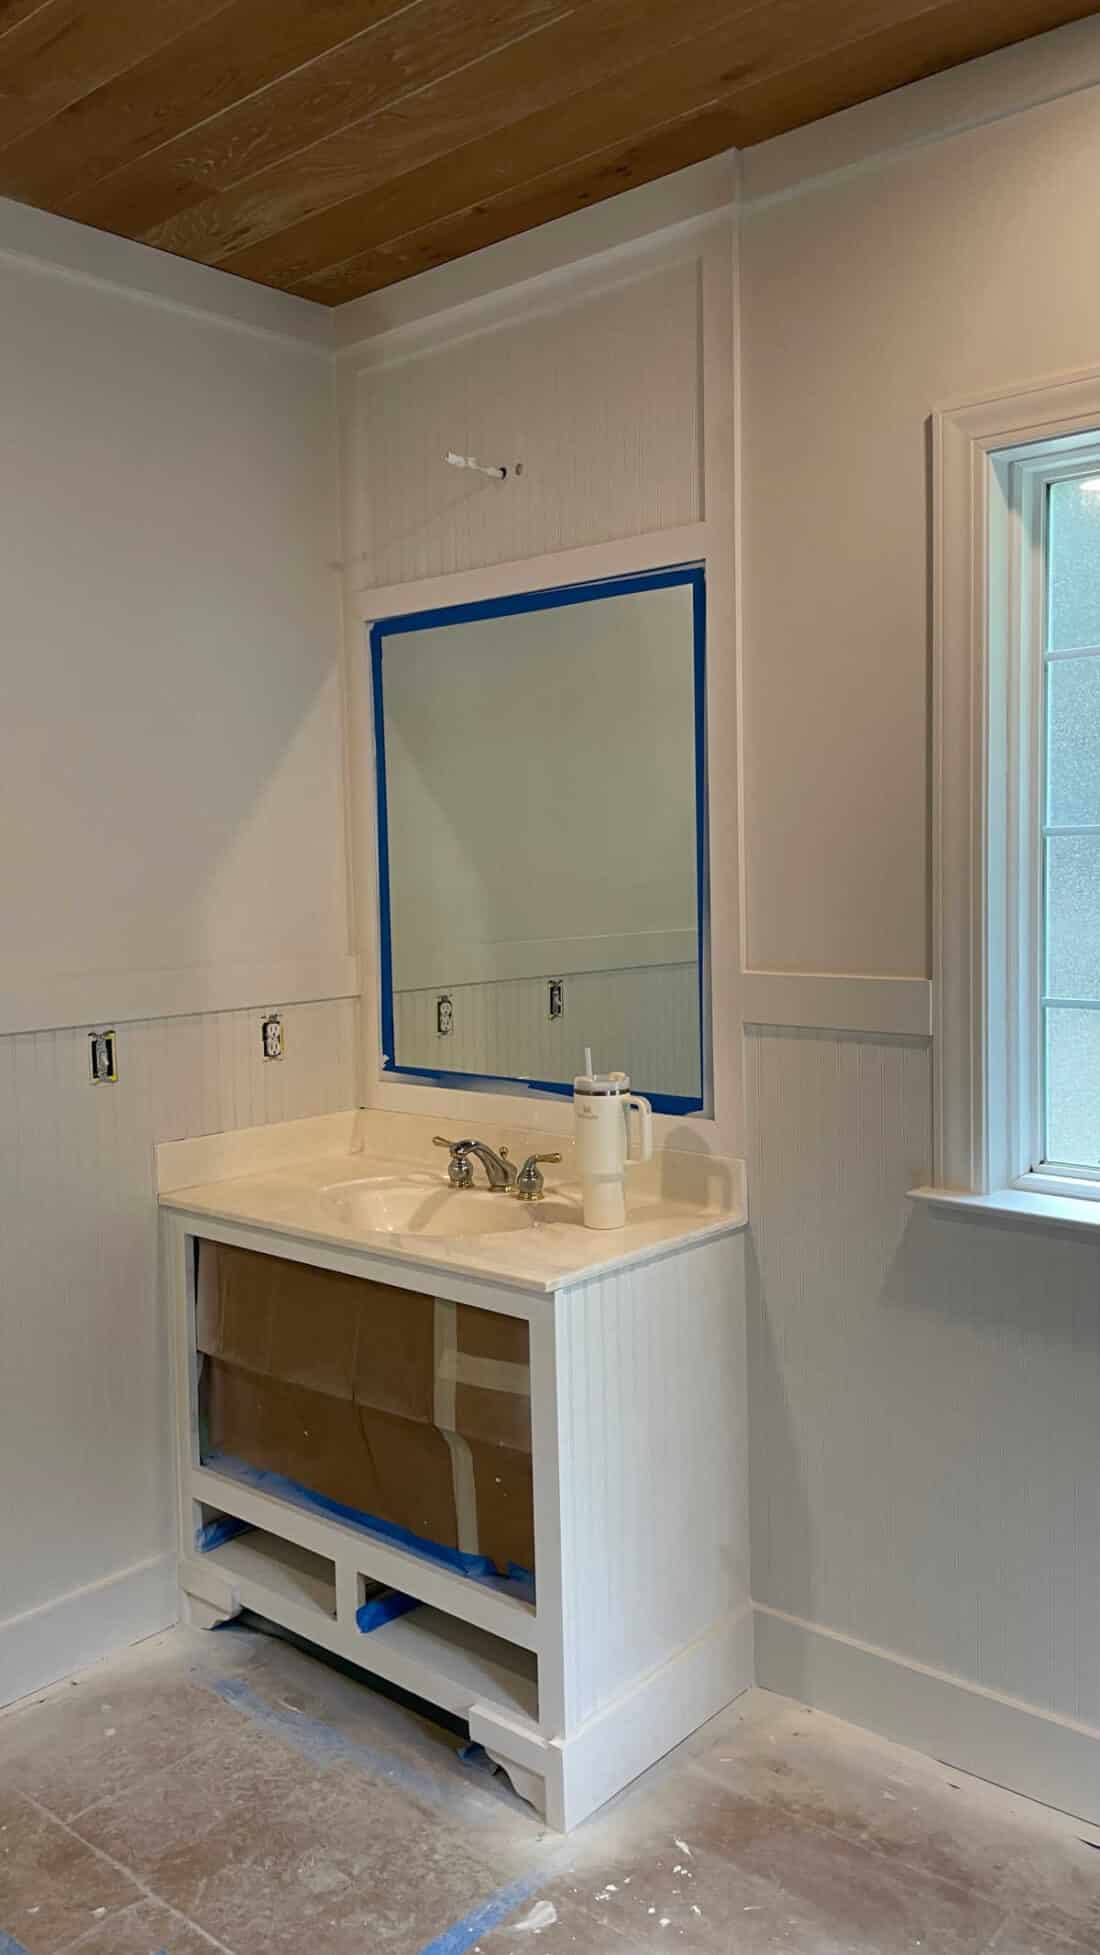 bathroom vanity primed white with added wood details